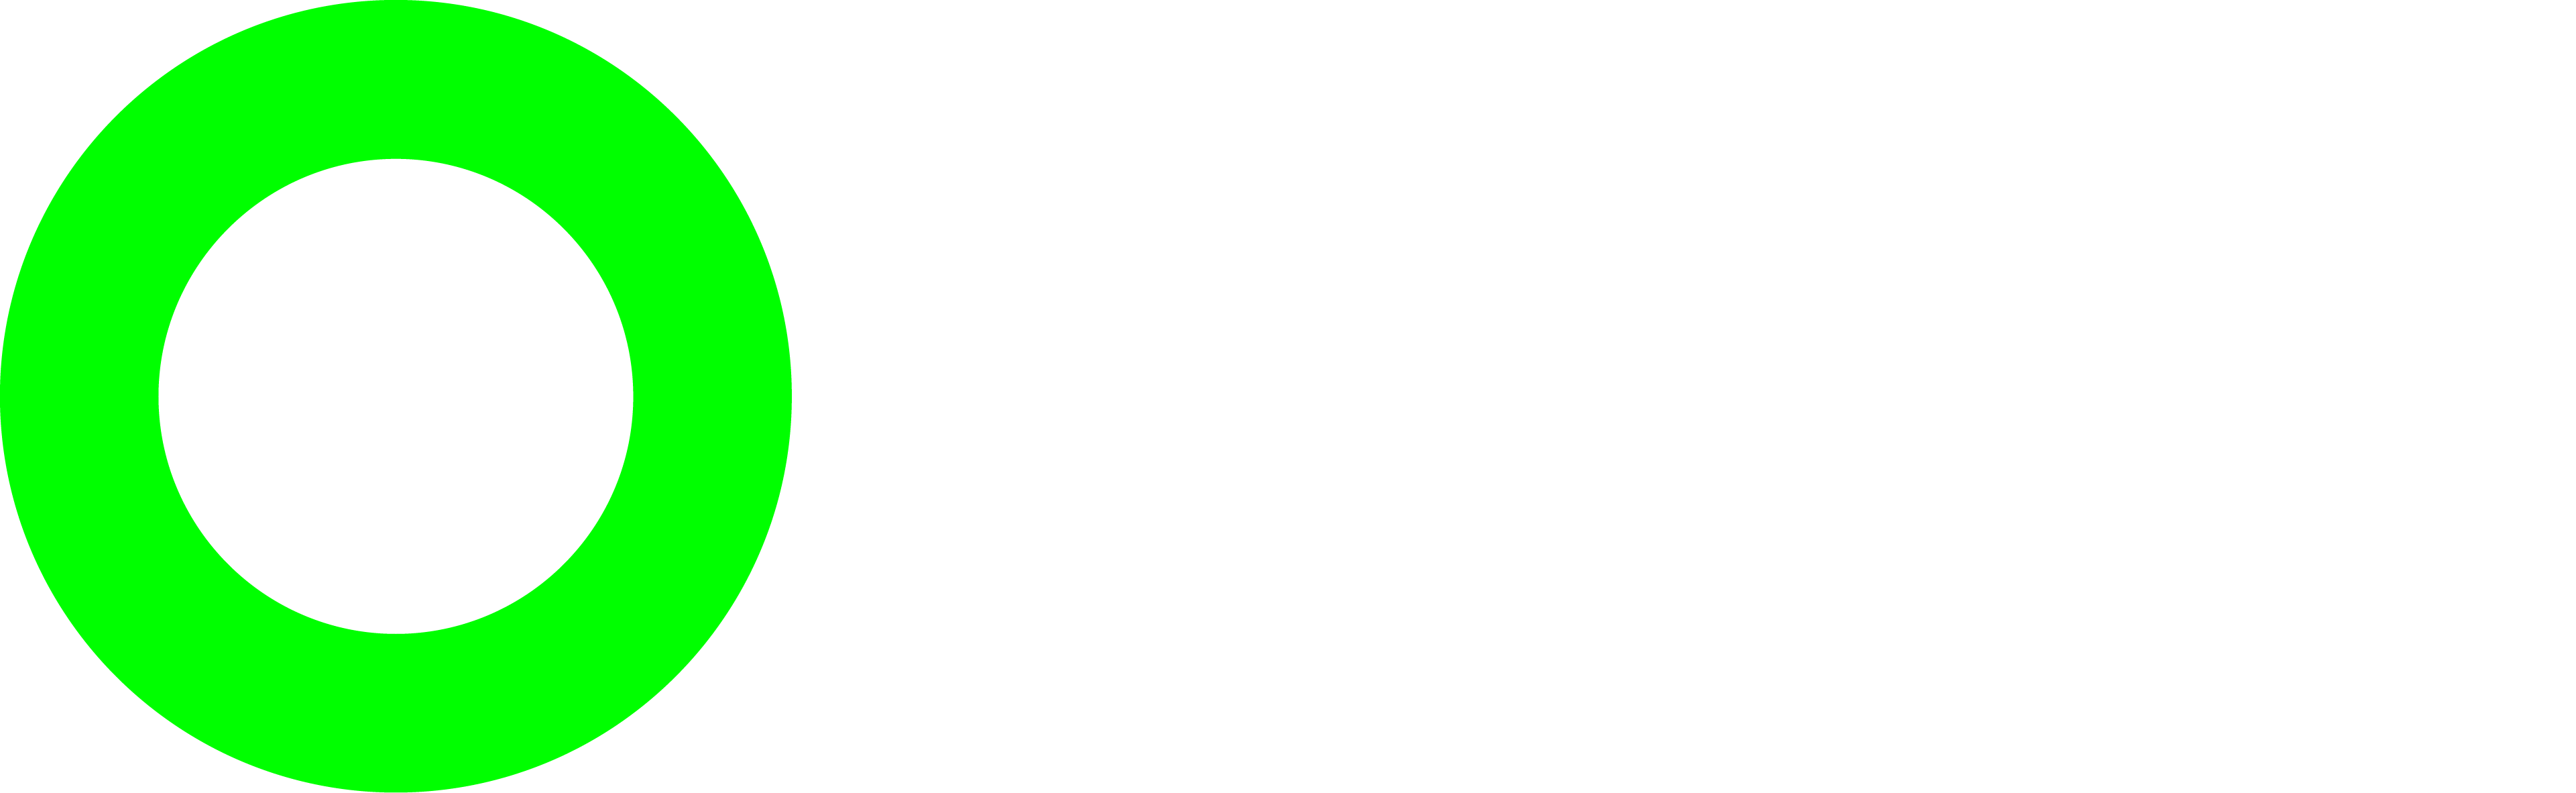 Fortescue logo reversed